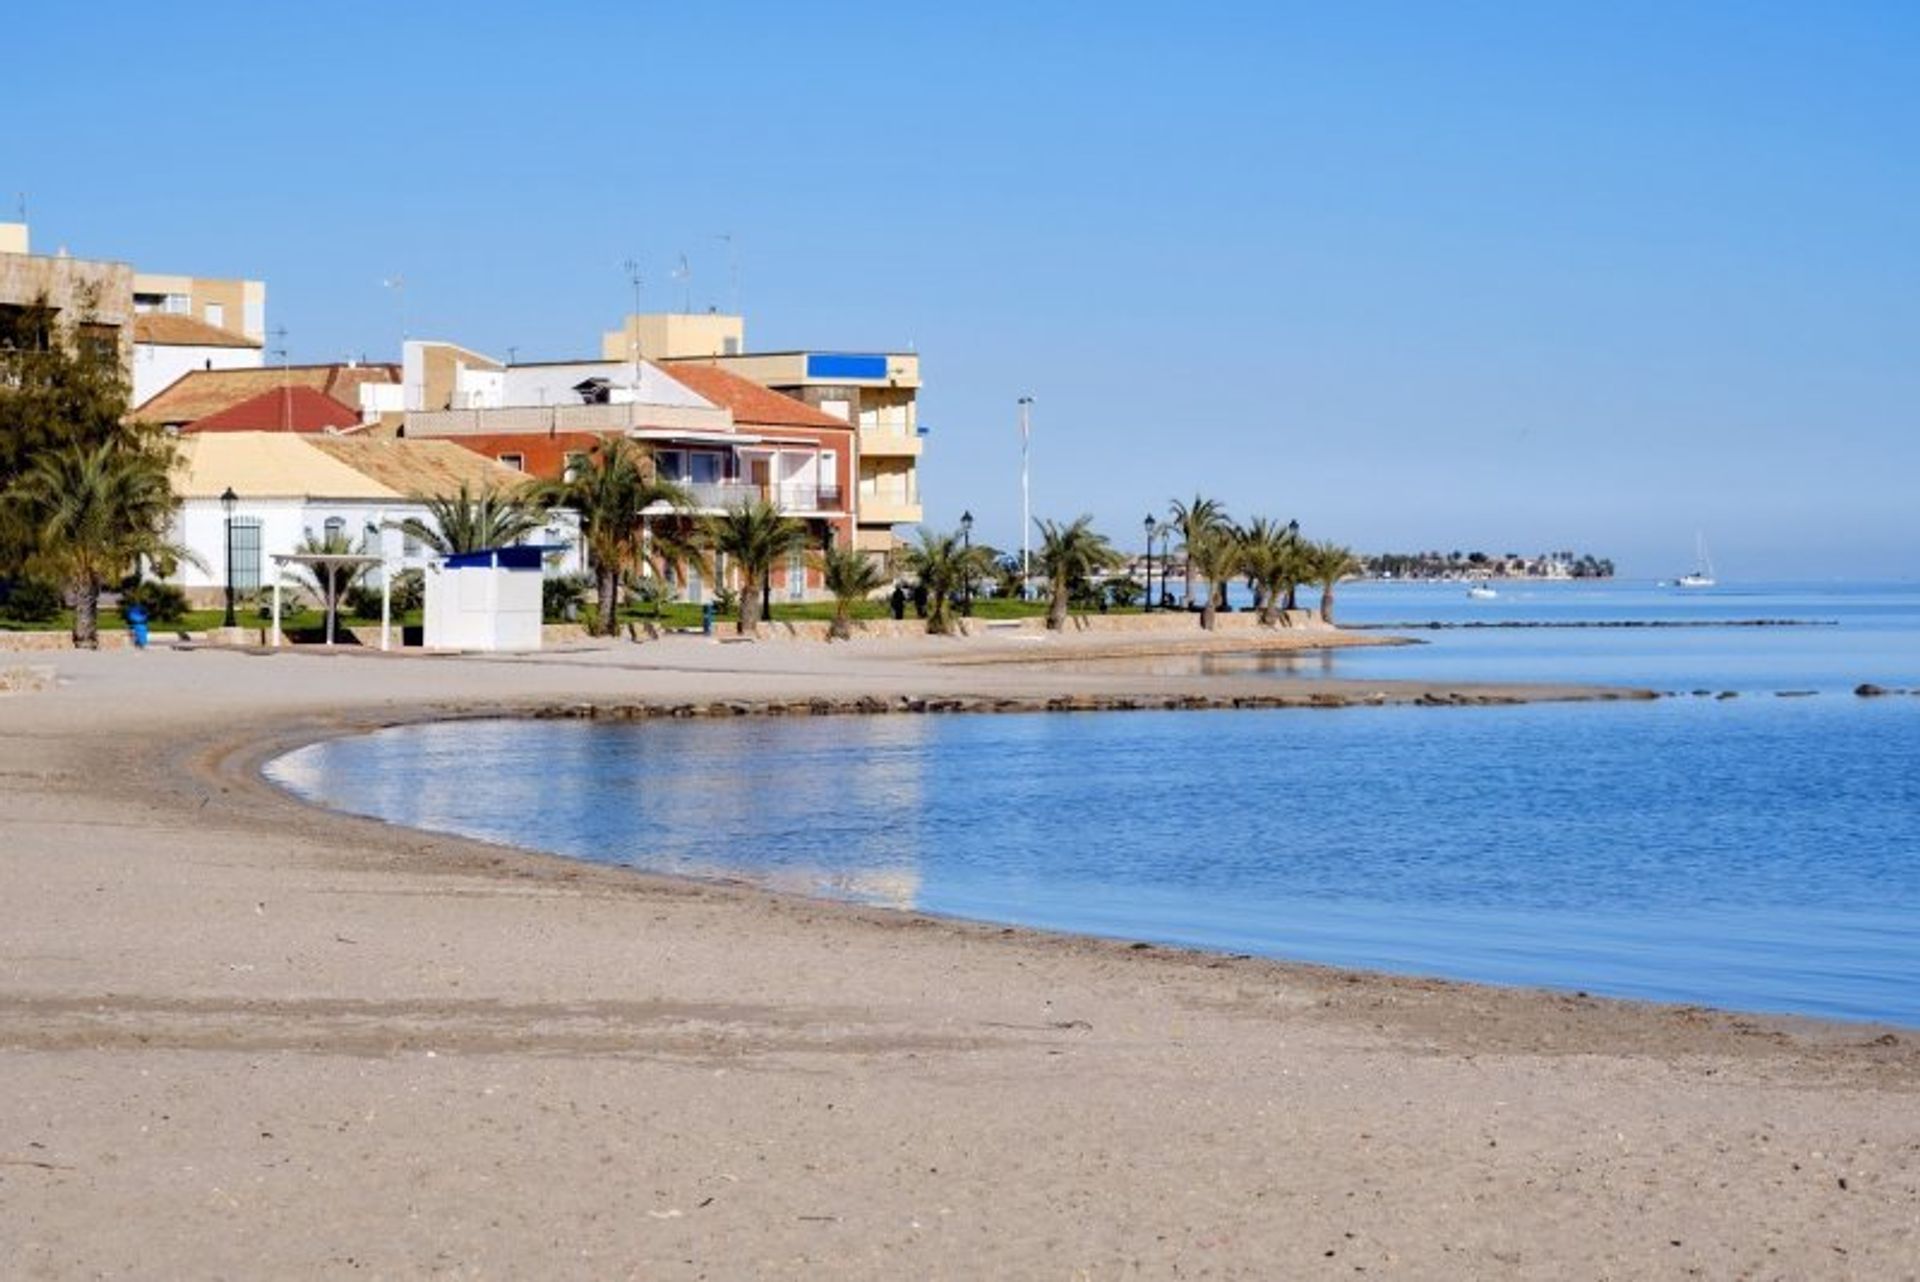 Unwind and enjoy a laid-back day by the coast on Las Palmeras beach in Los Alcazares